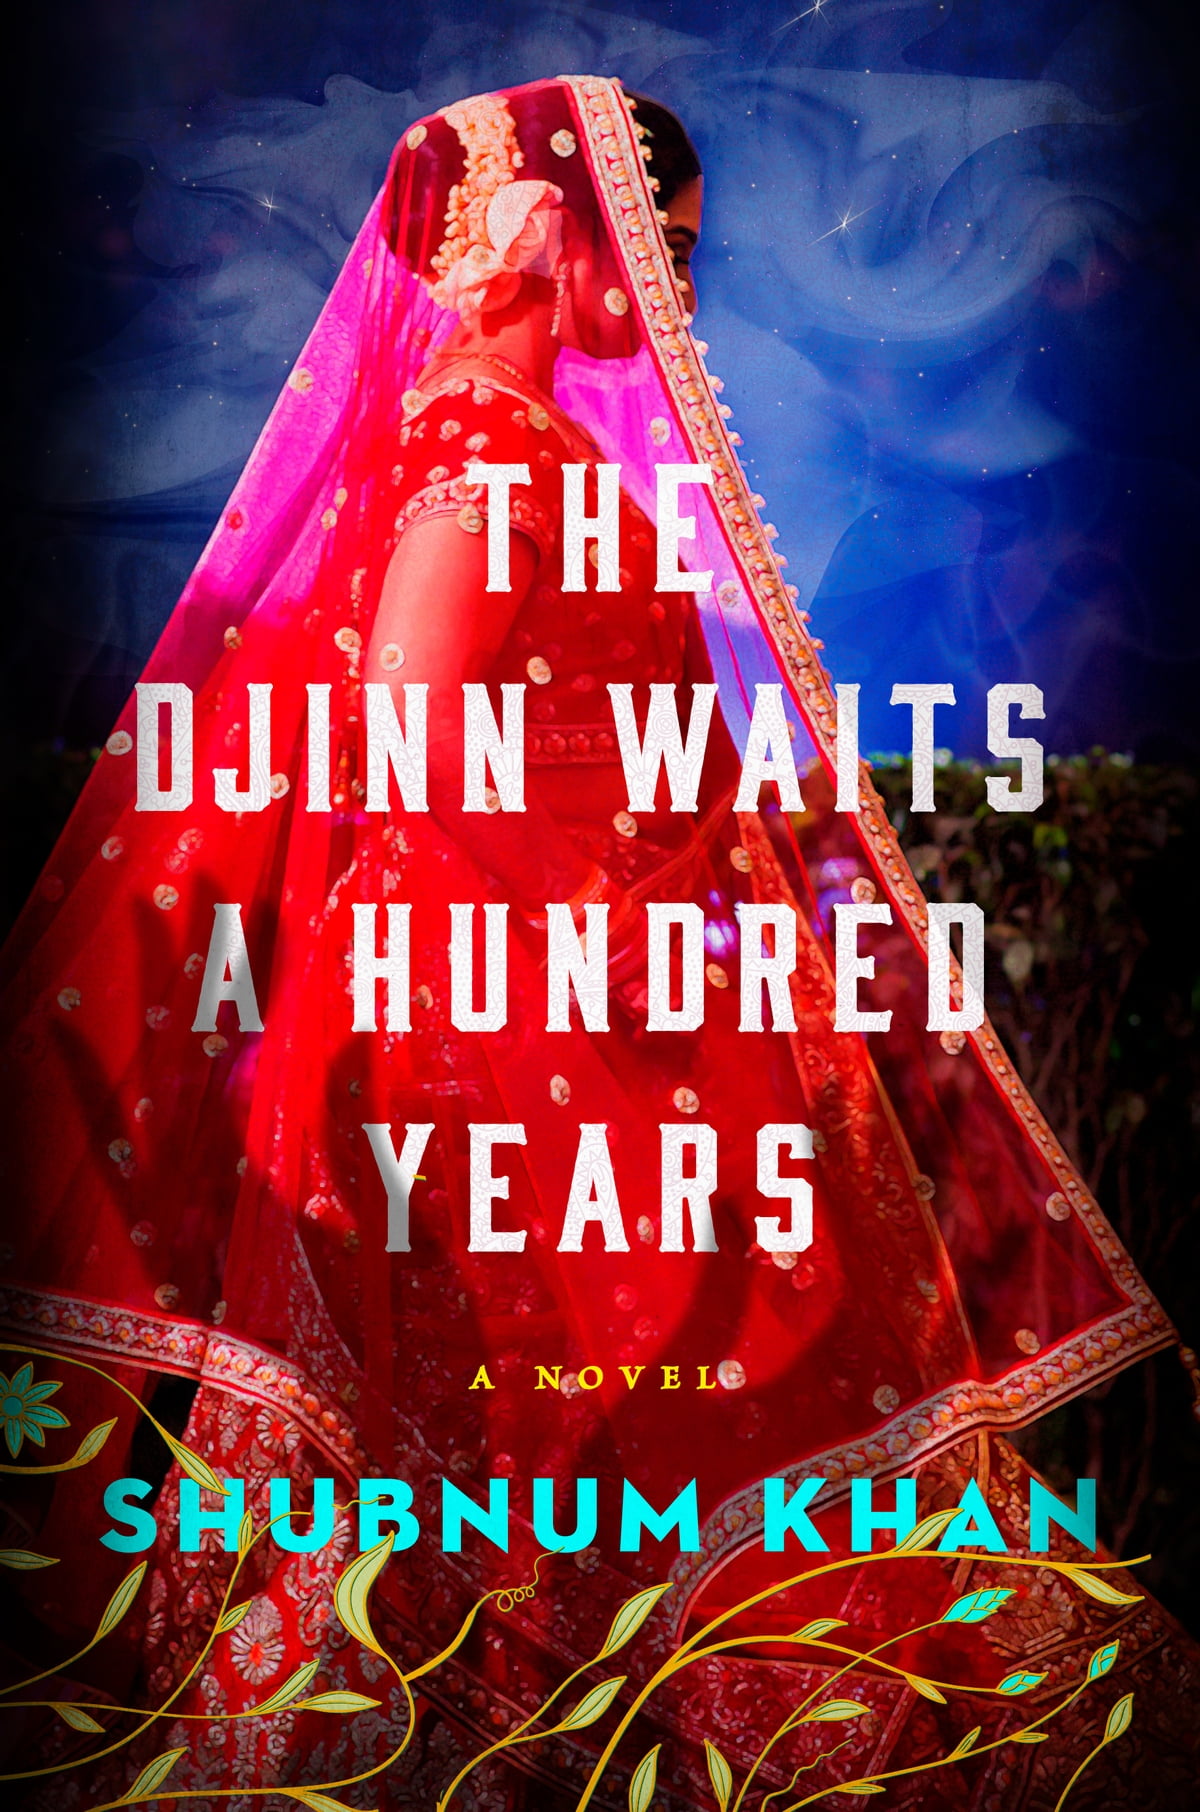 the djinn waits a hundred years 1